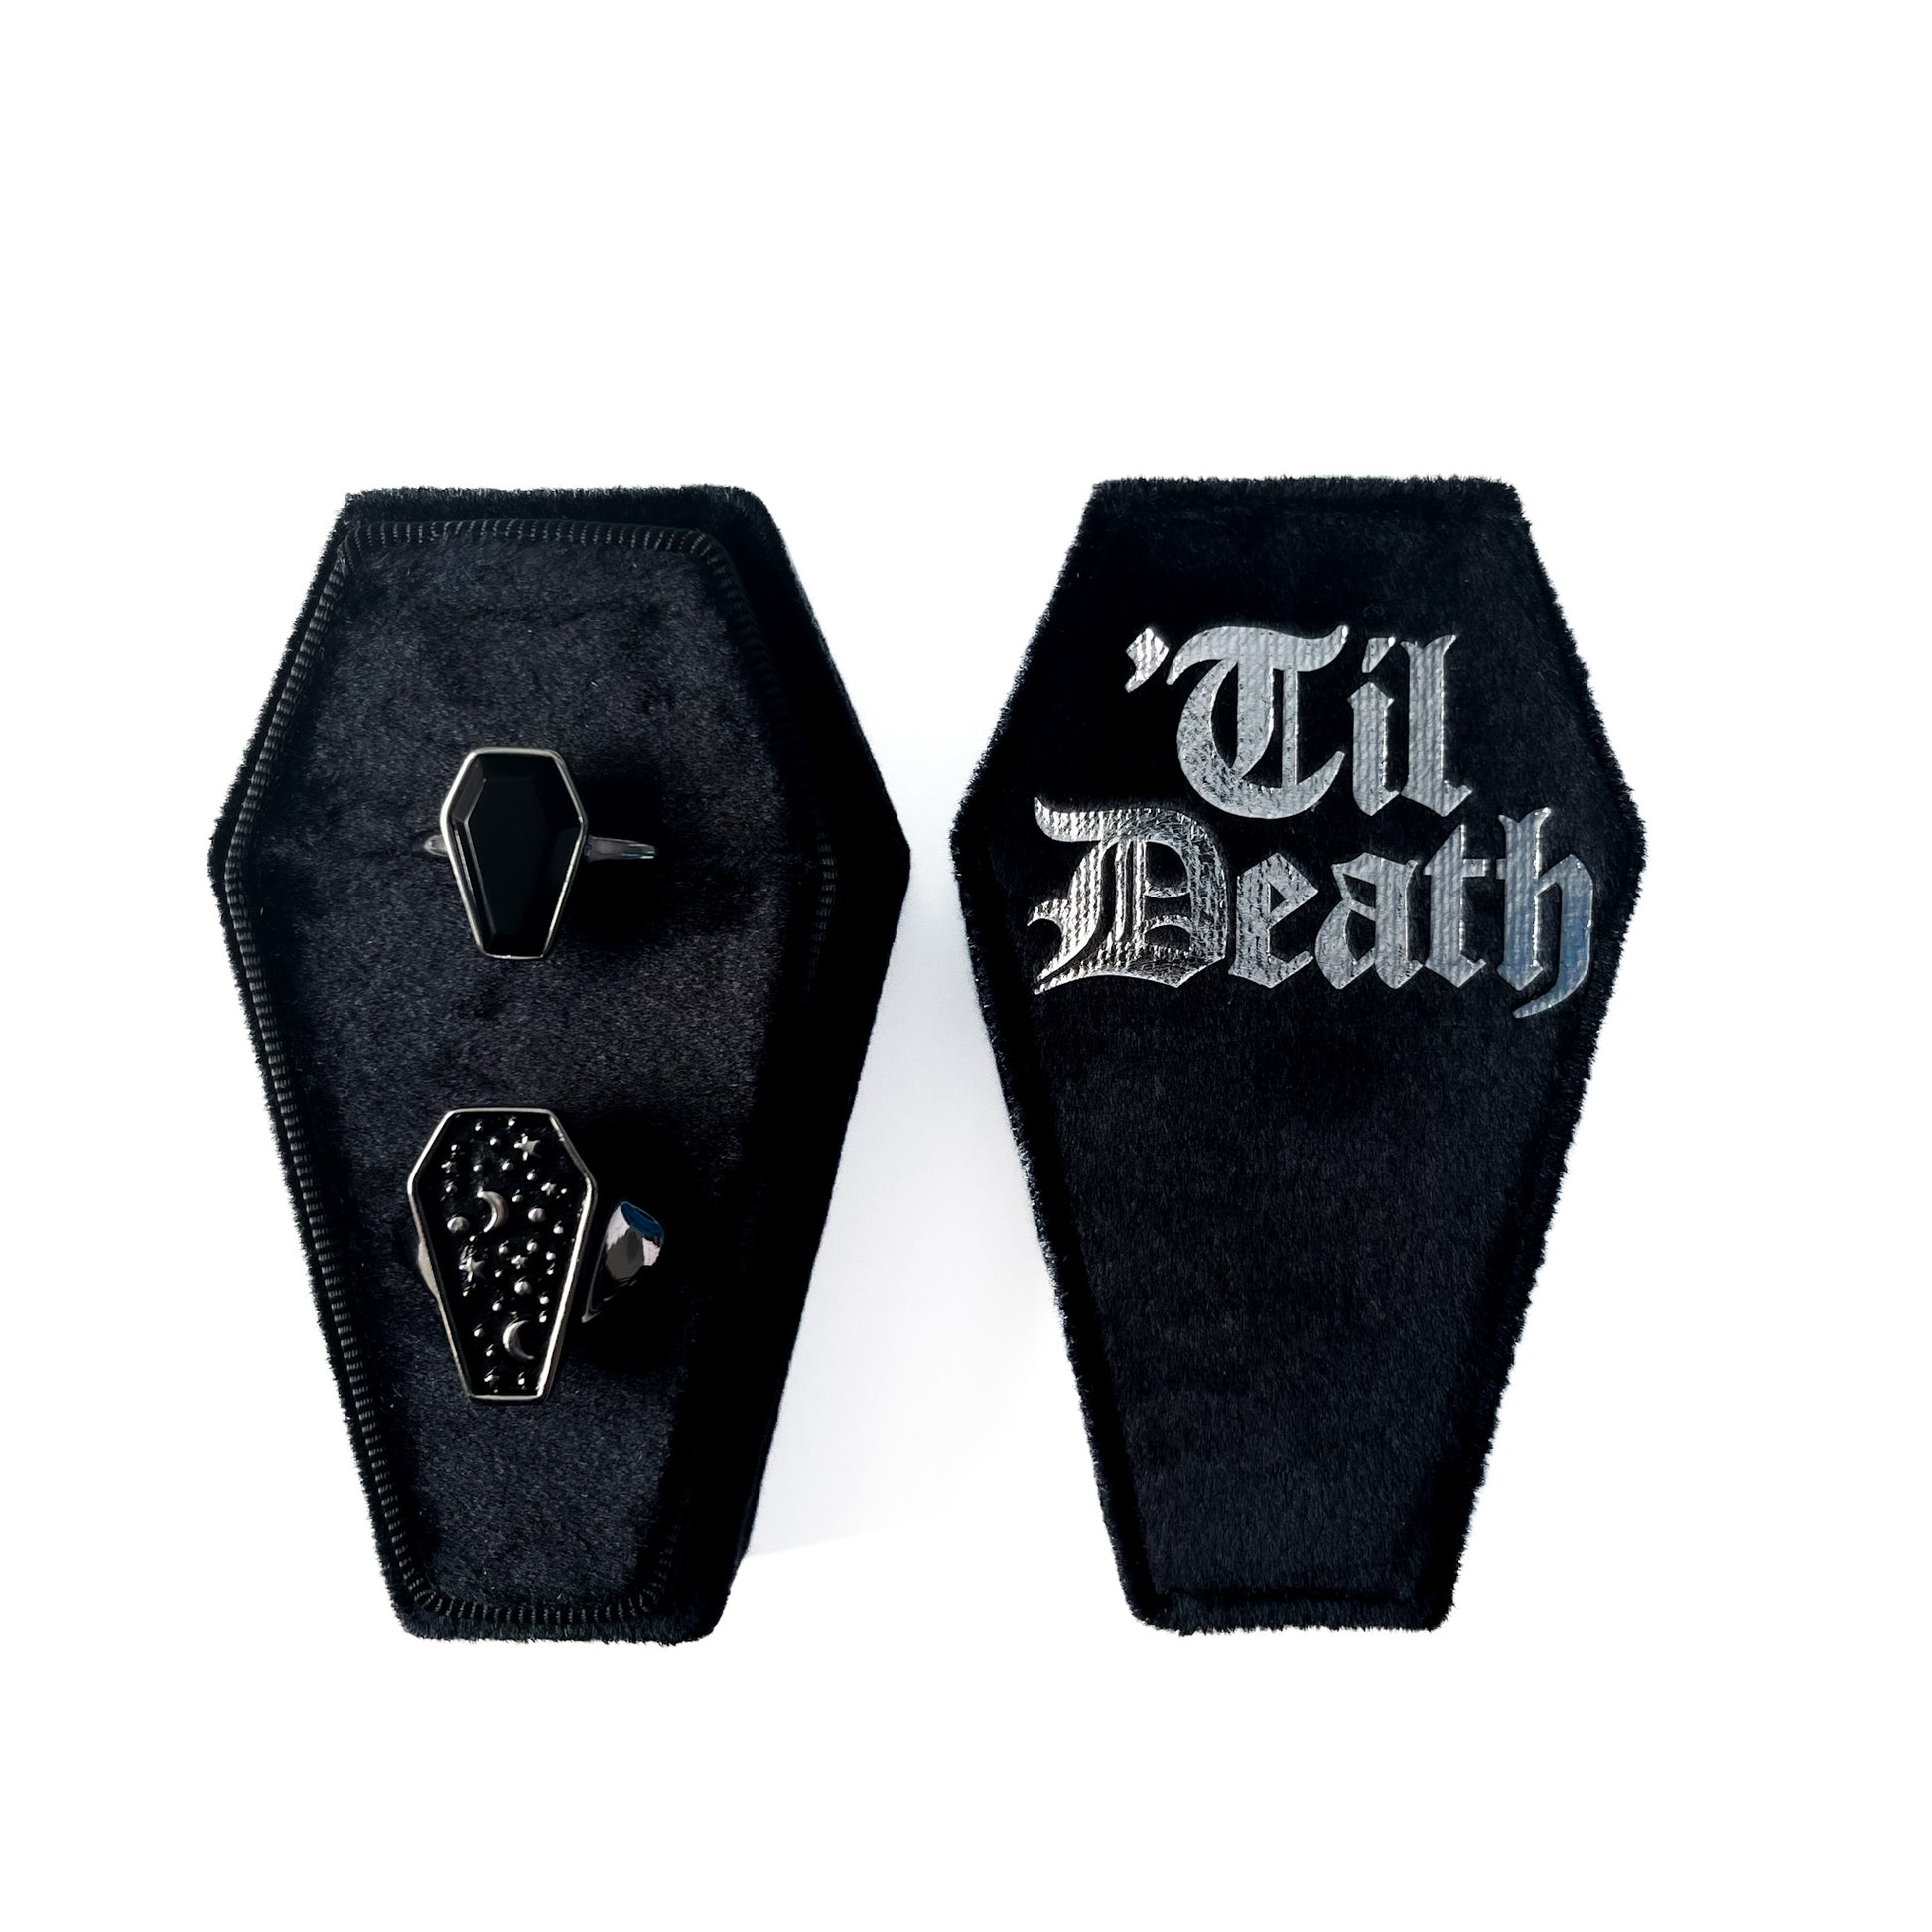 Til Death Coffin Engagement Ring Box Mysticum Luna